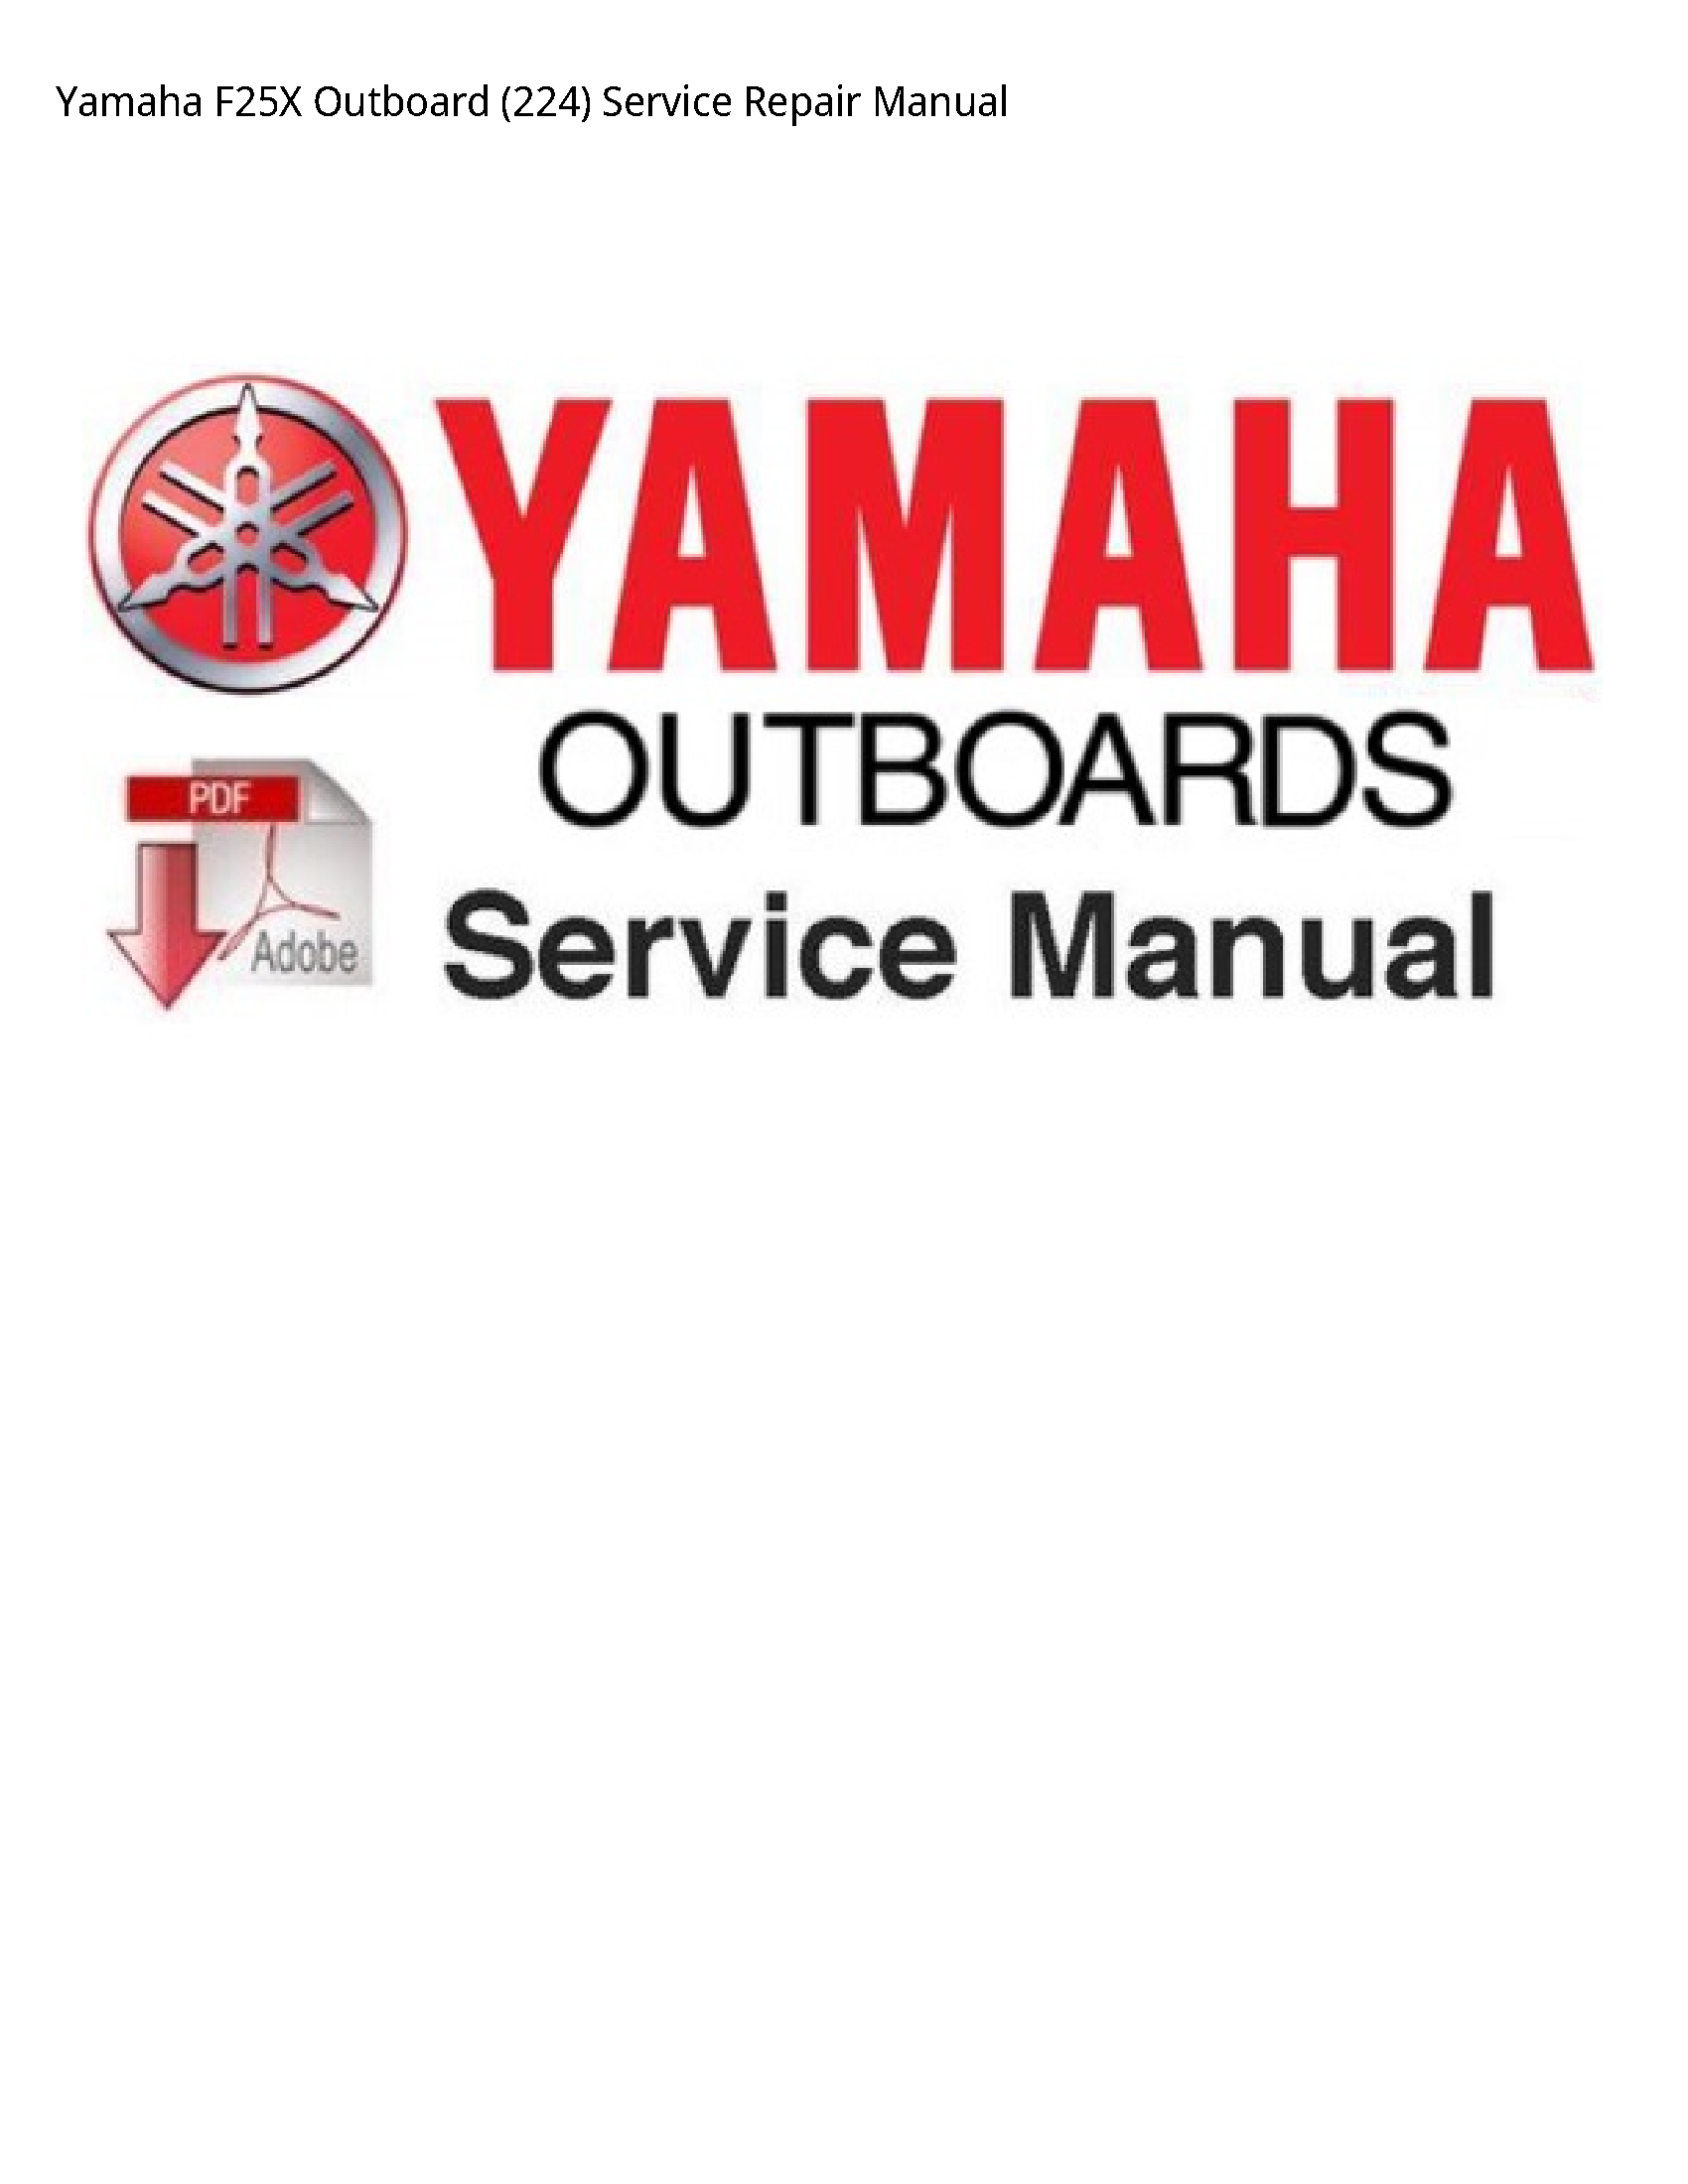 Yamaha F25X Outboard manual